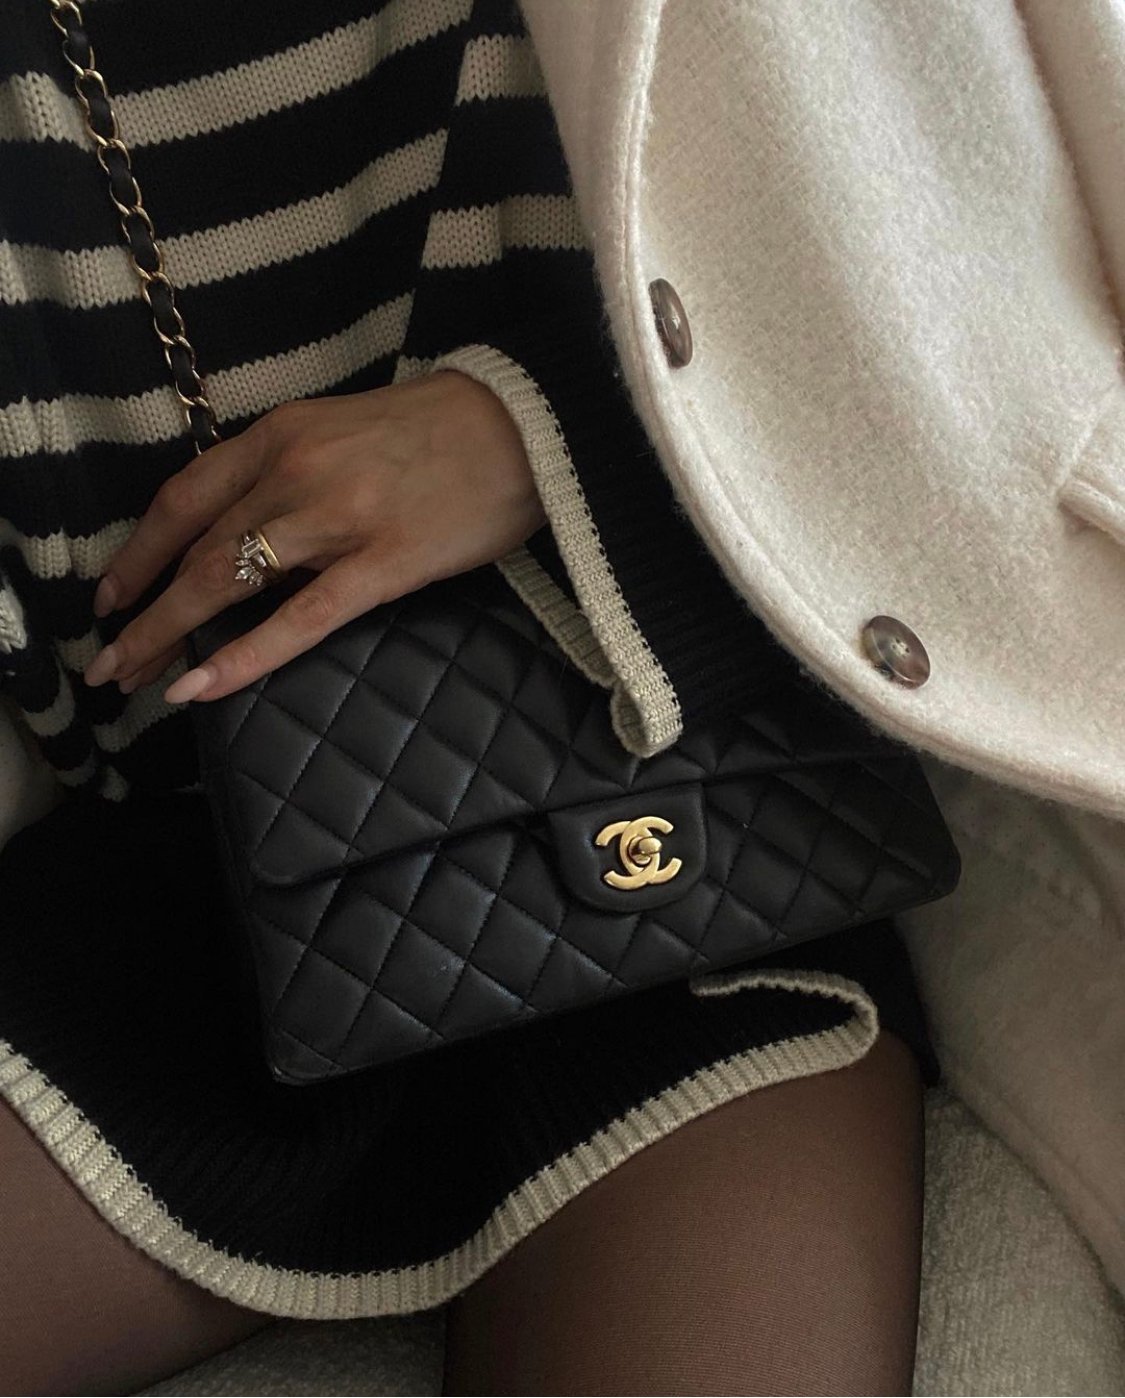 The Surprising Original Price of Favorite Chanel Items in Your Closet -  PurseBop